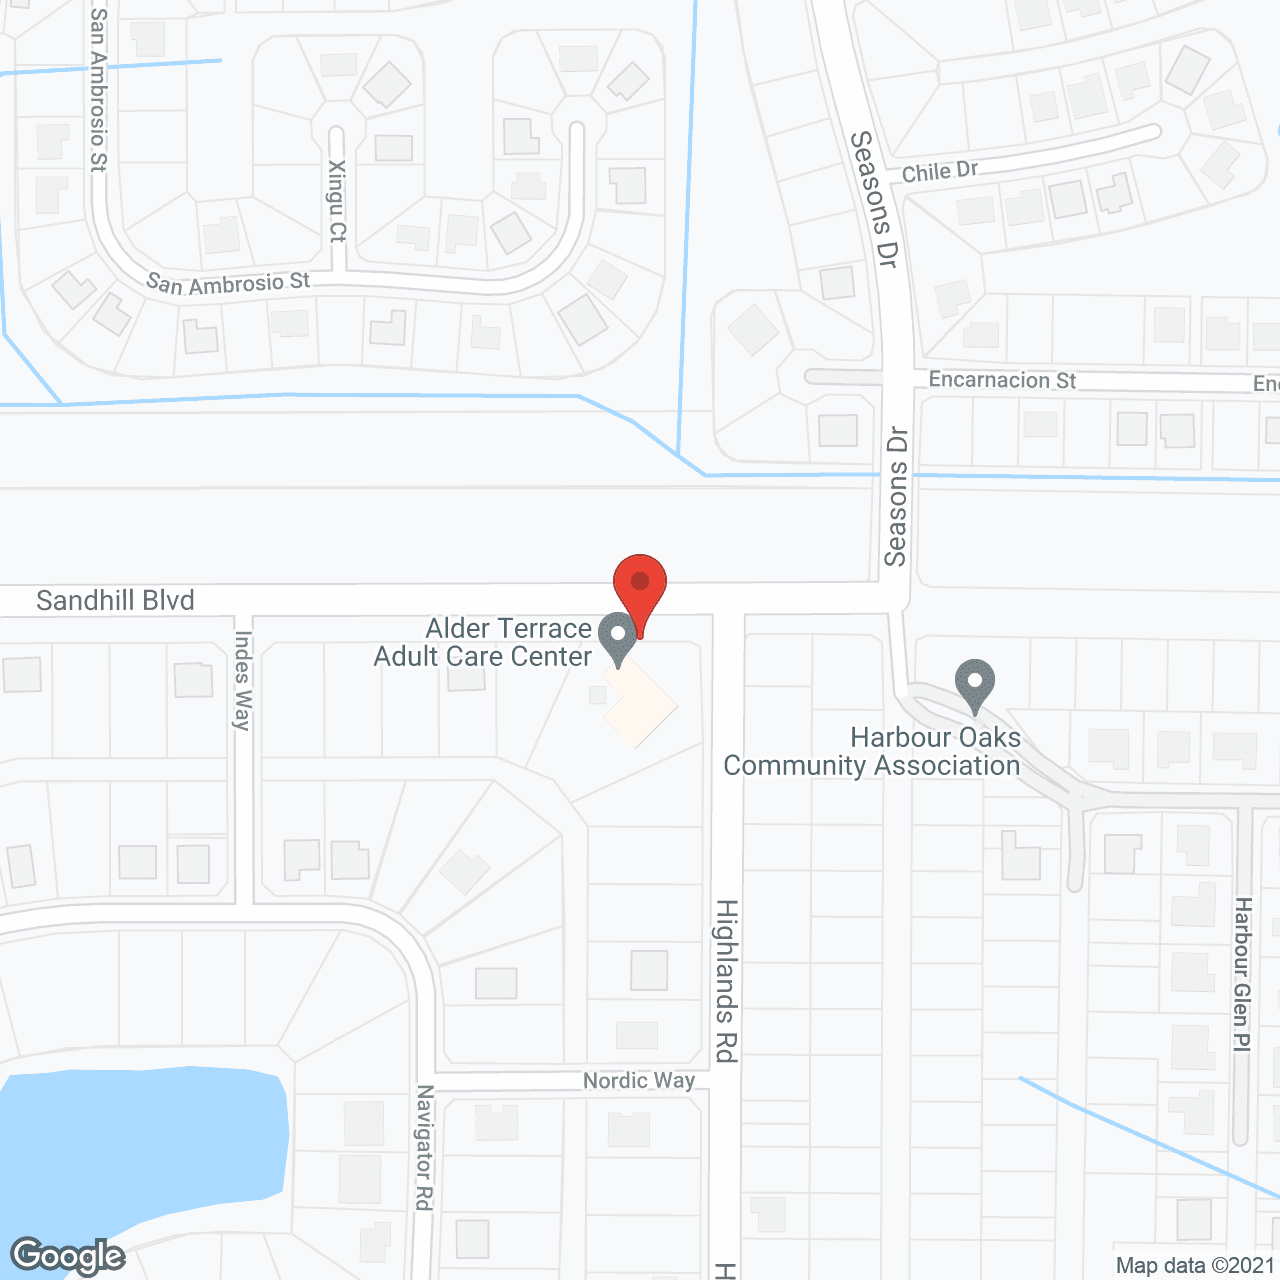 Alder Terrace Care Center in google map